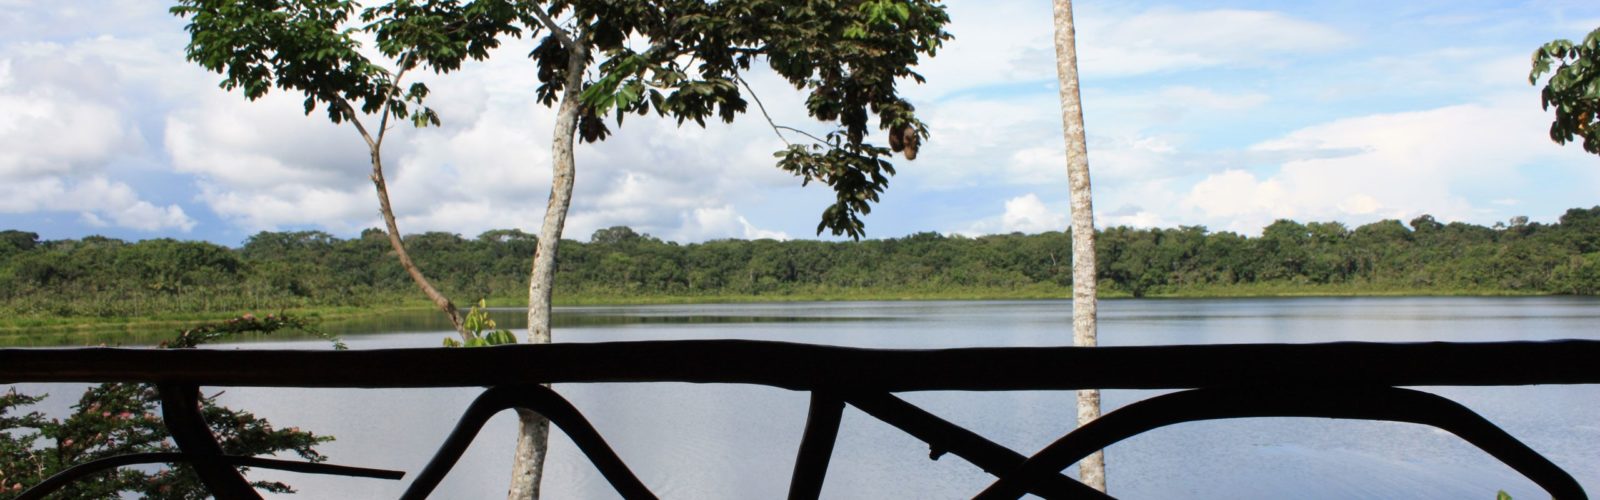 Balcony view, Napo Wildlife Centre, Ecuador, The Amazon